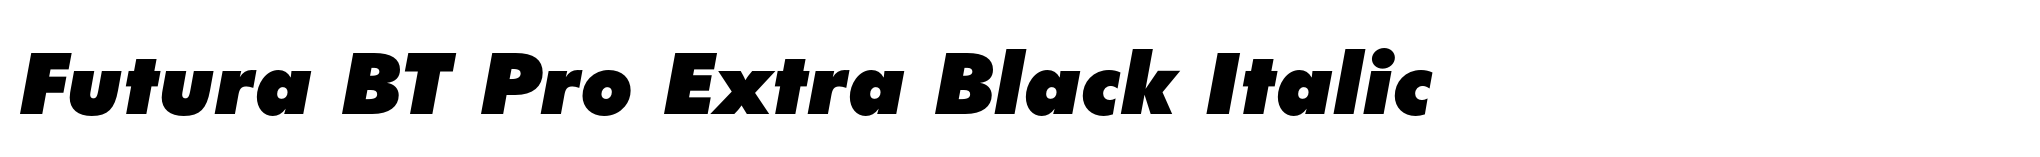 Futura BT Pro Extra Black Italic image